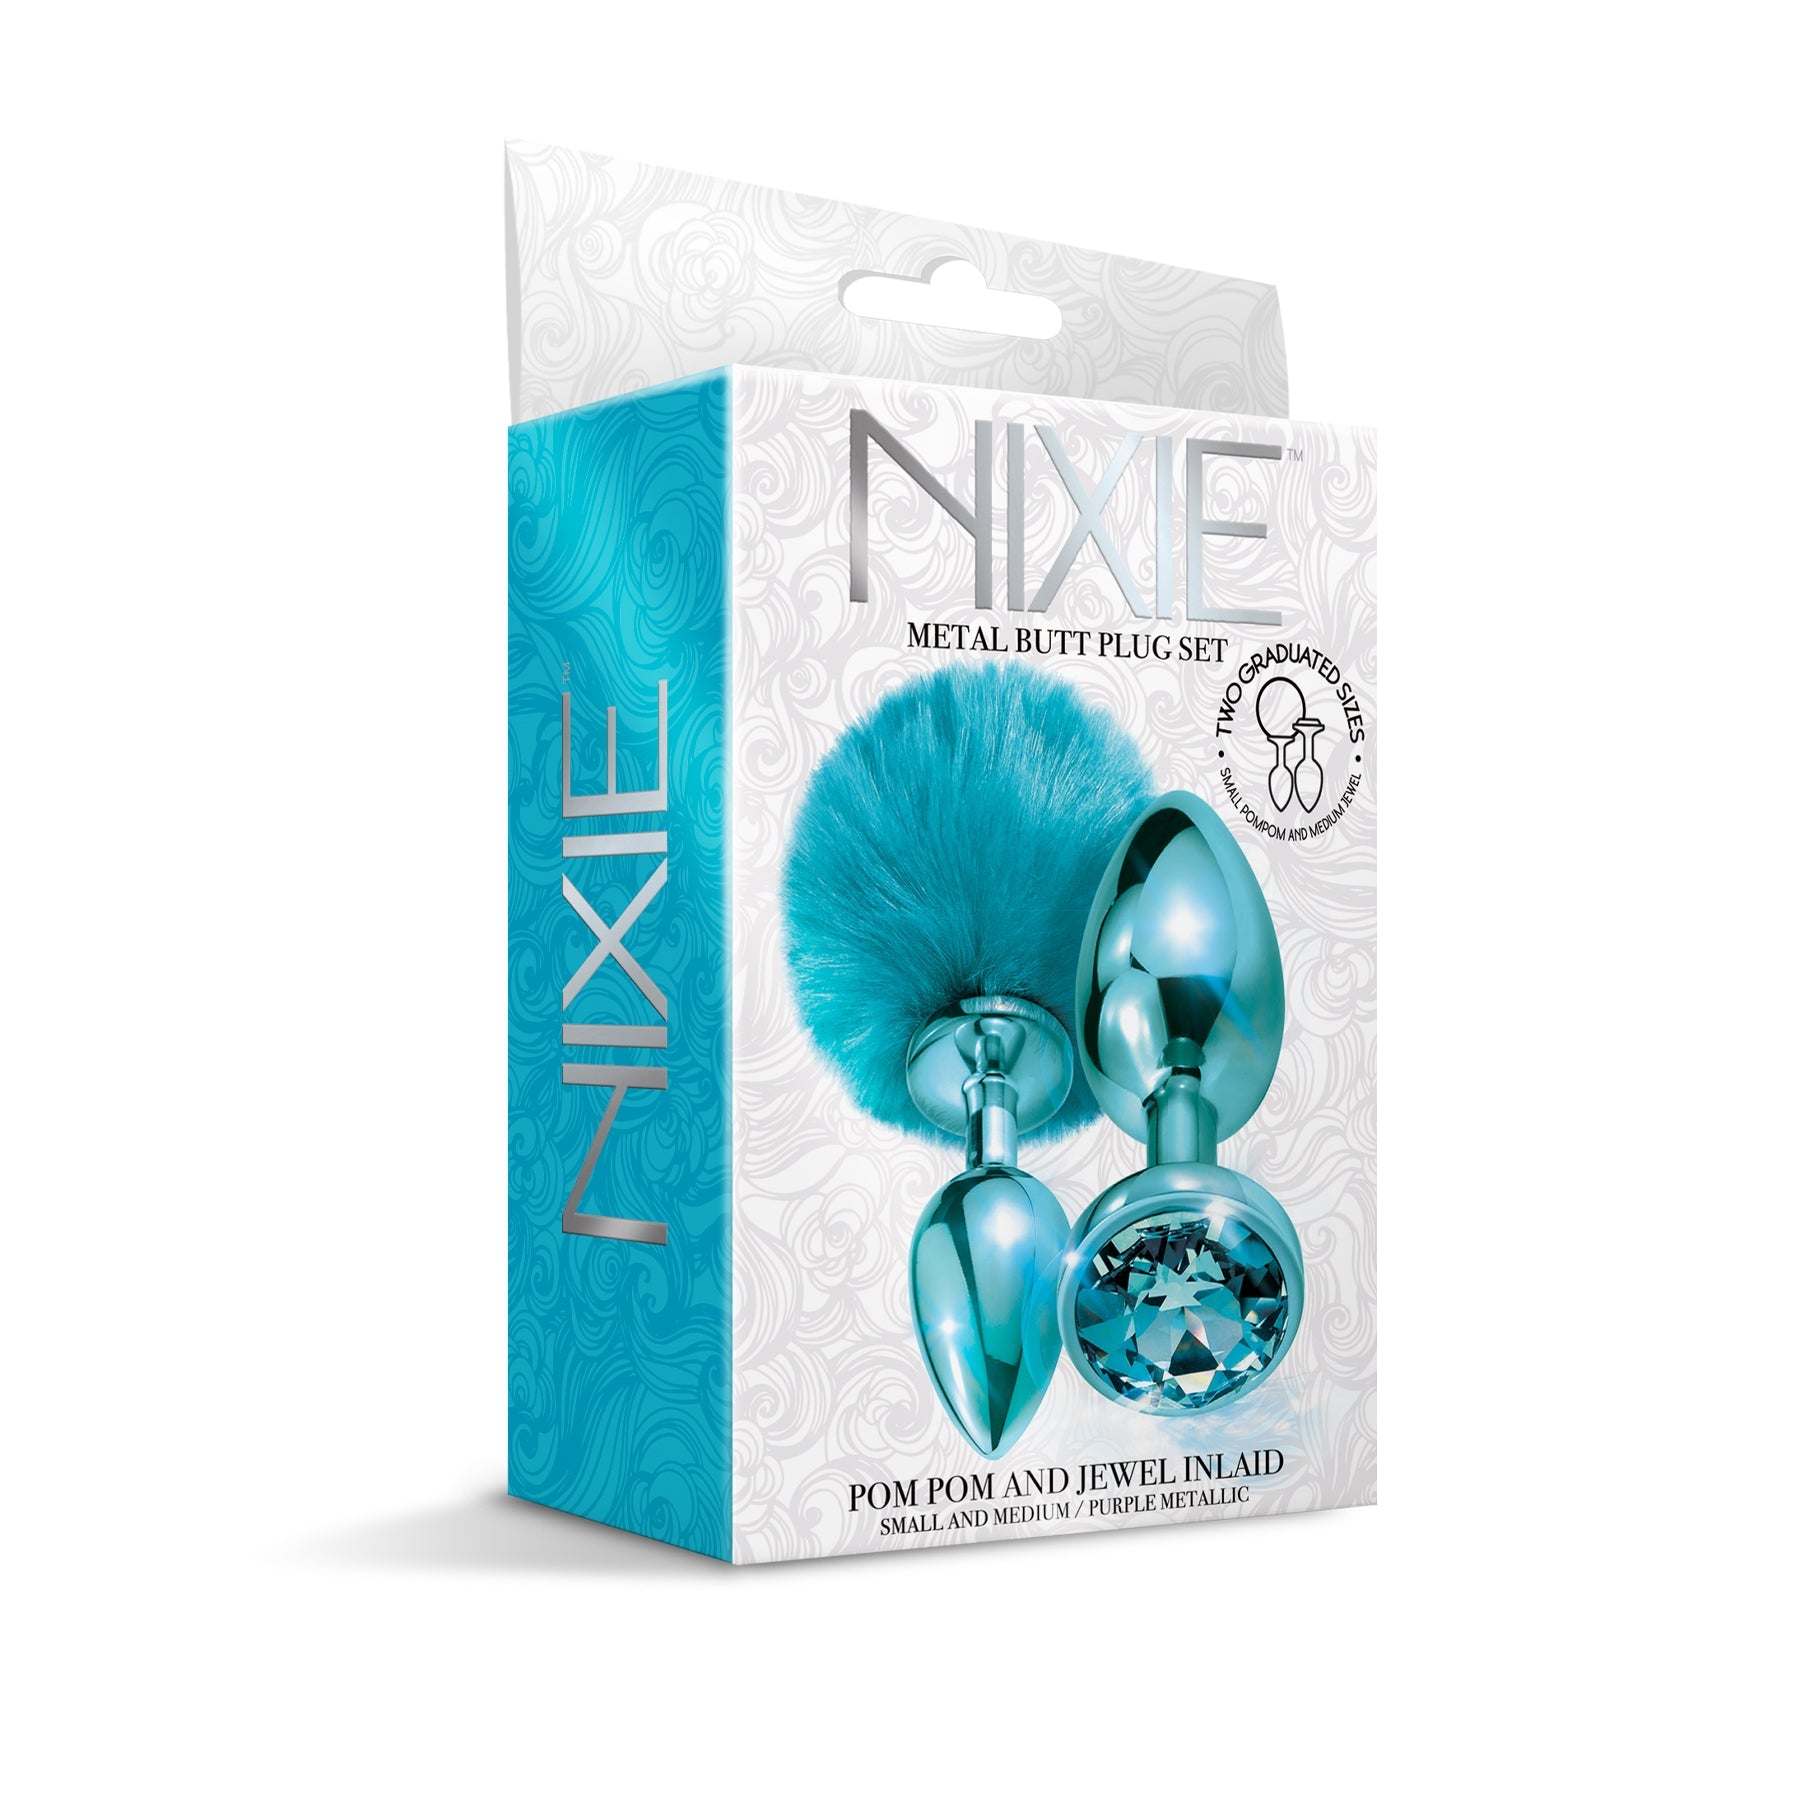 NIXIE Metal Butt Plug Set, Pom Pom and Jewel Inlaid, Blue Metallic - THES